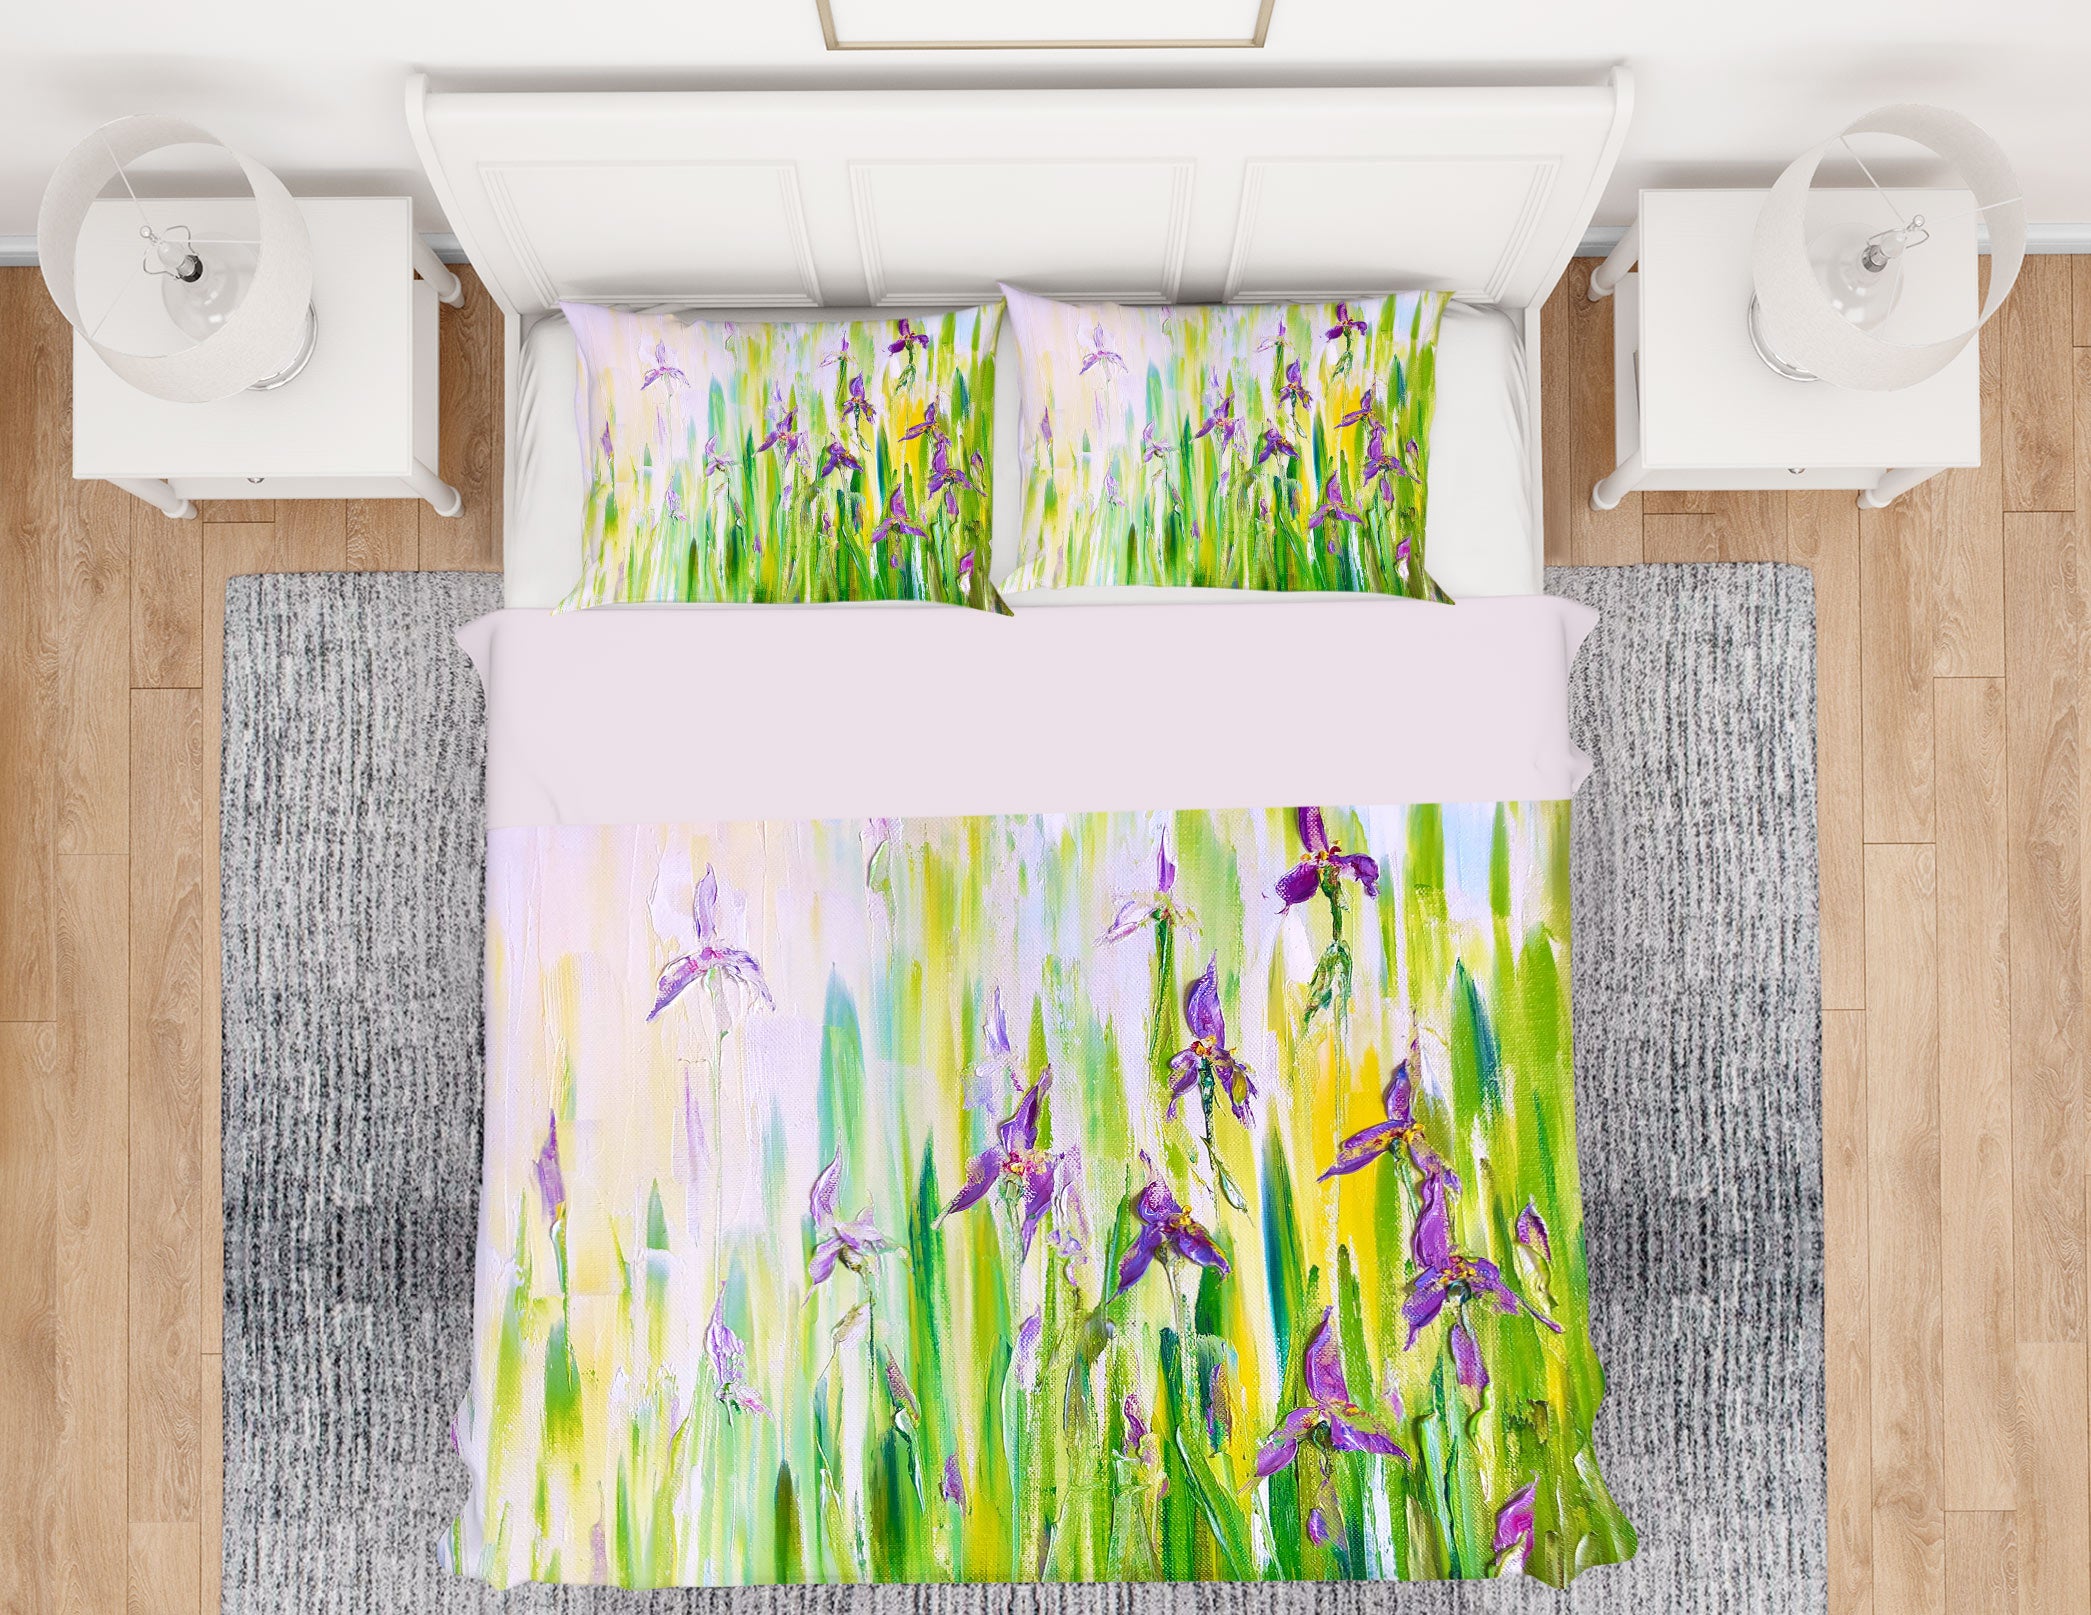 3D Purple Flower 448 Skromova Marina Bedding Bed Pillowcases Quilt